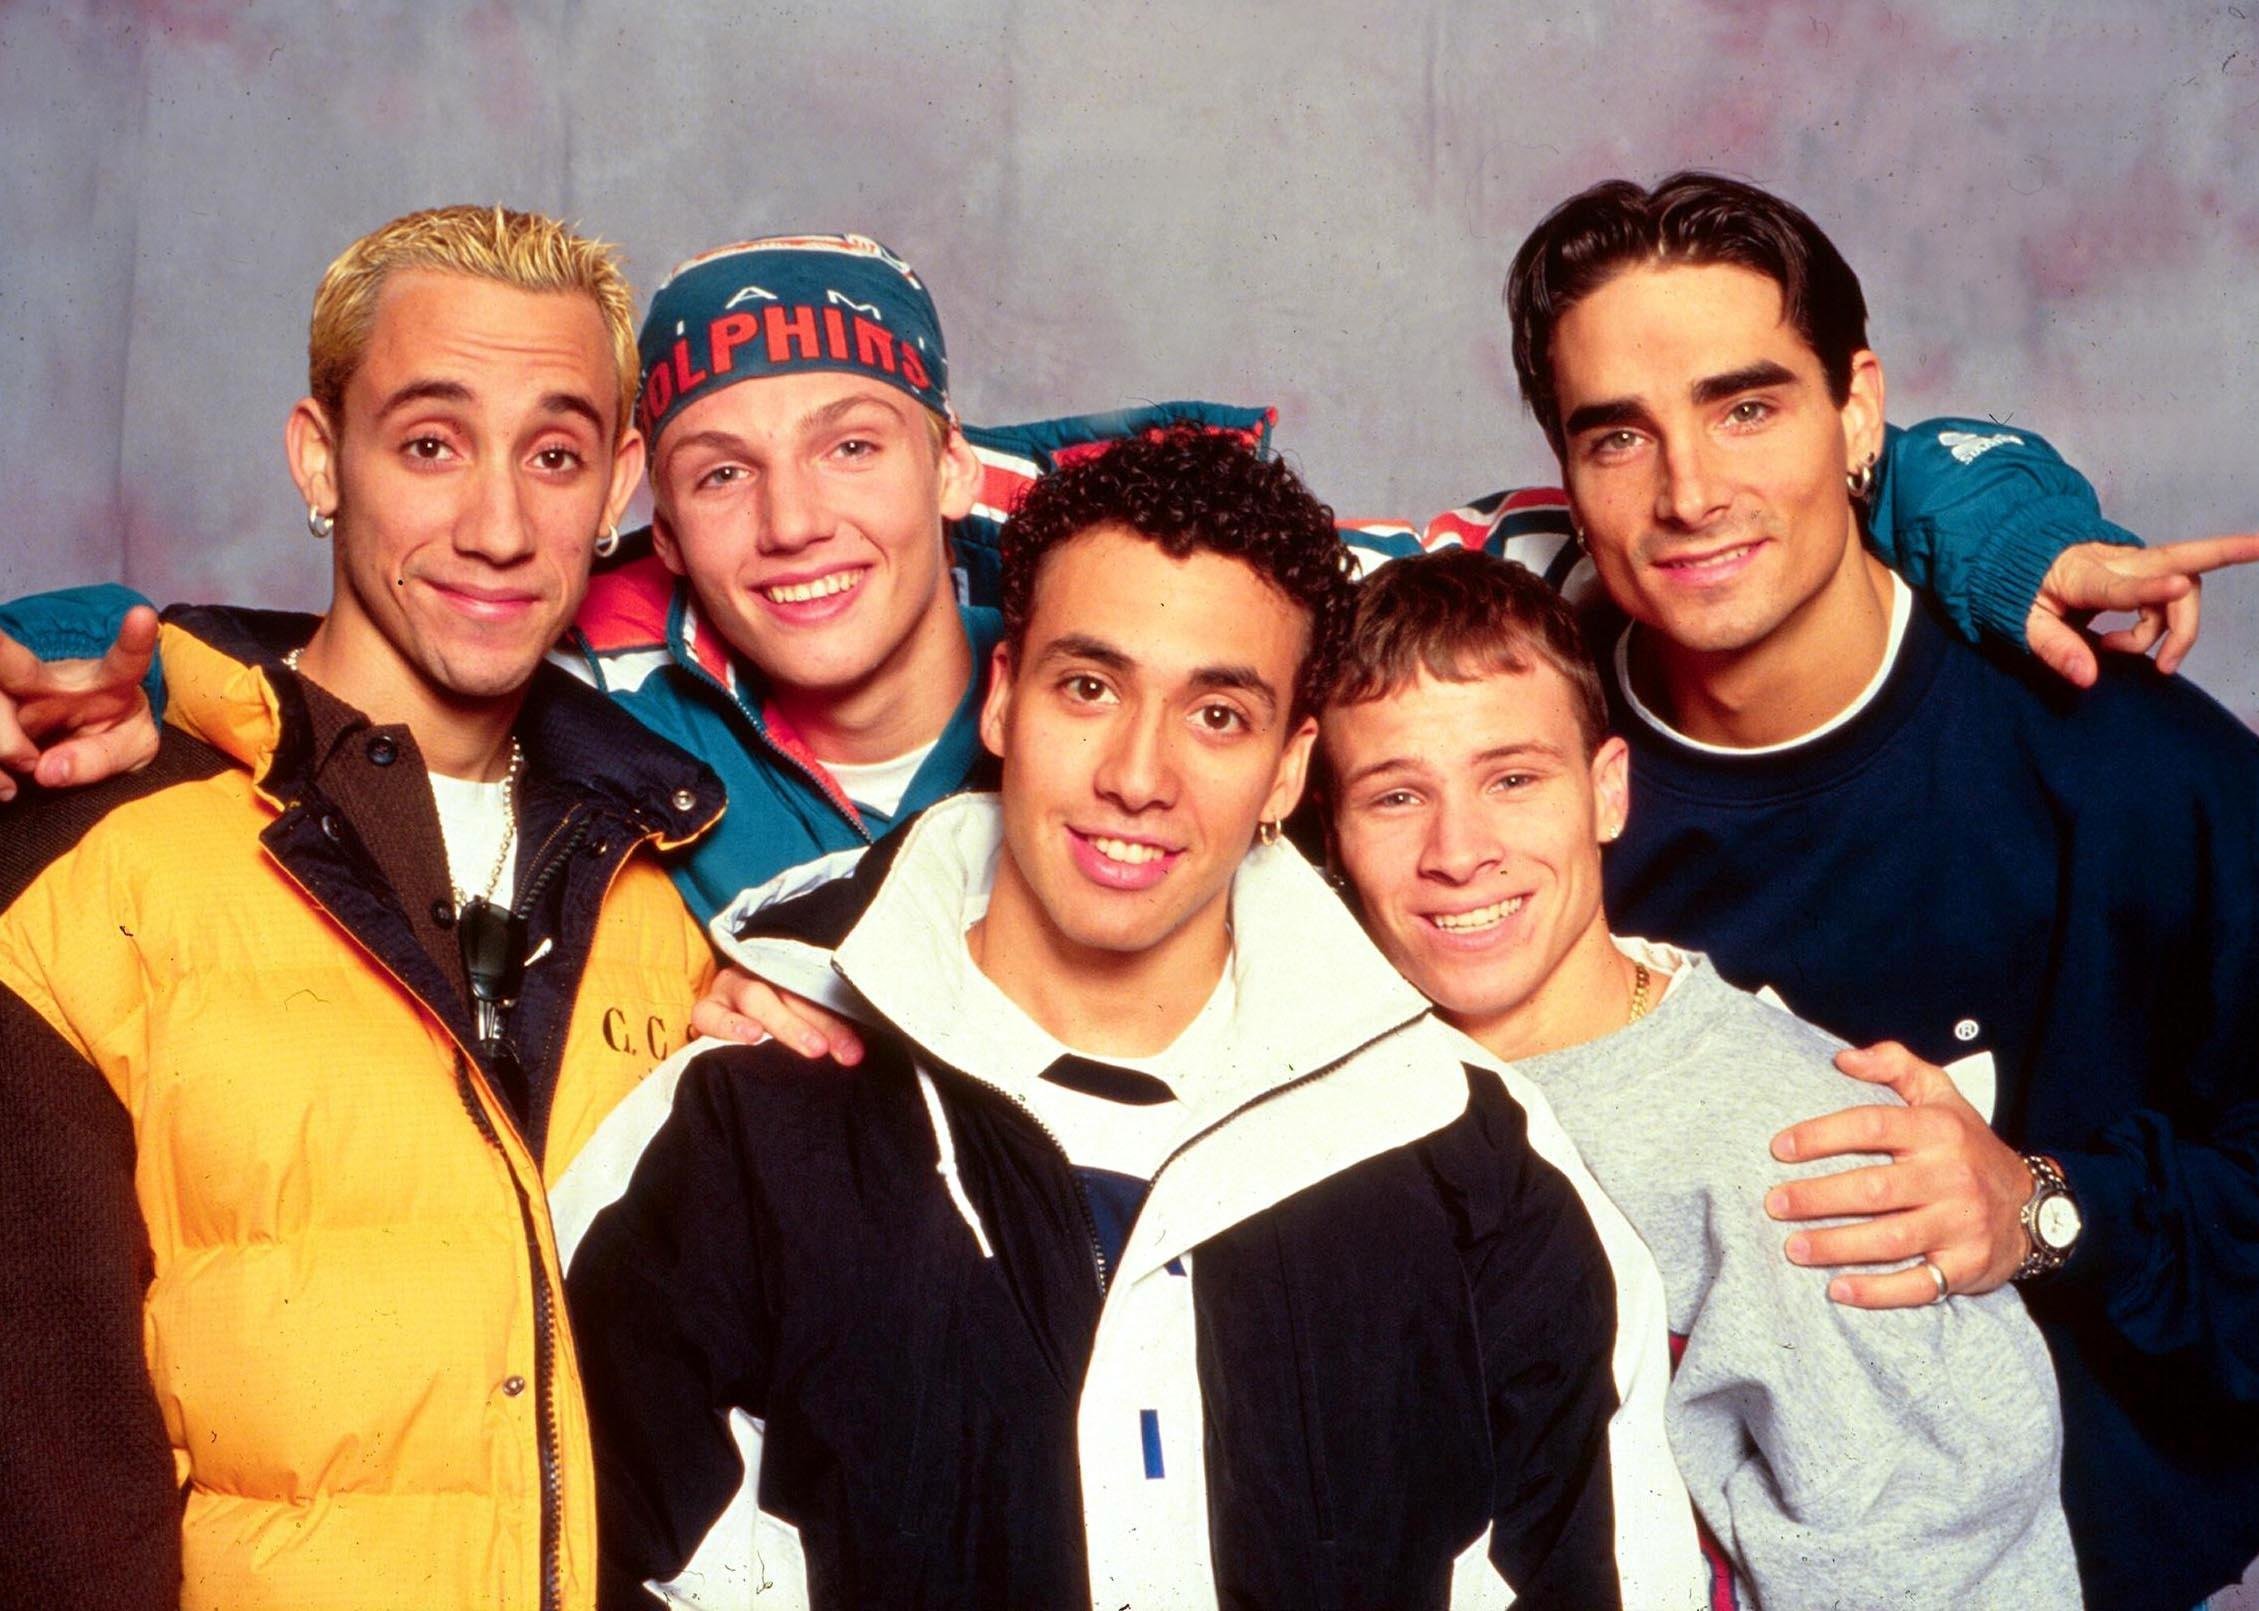 Группы 90 х названия. Бэкстрит бойс. Группа Backstreet boys. Группа Backstreet boys в молодости. Бэкстрит бойс в 90-х.